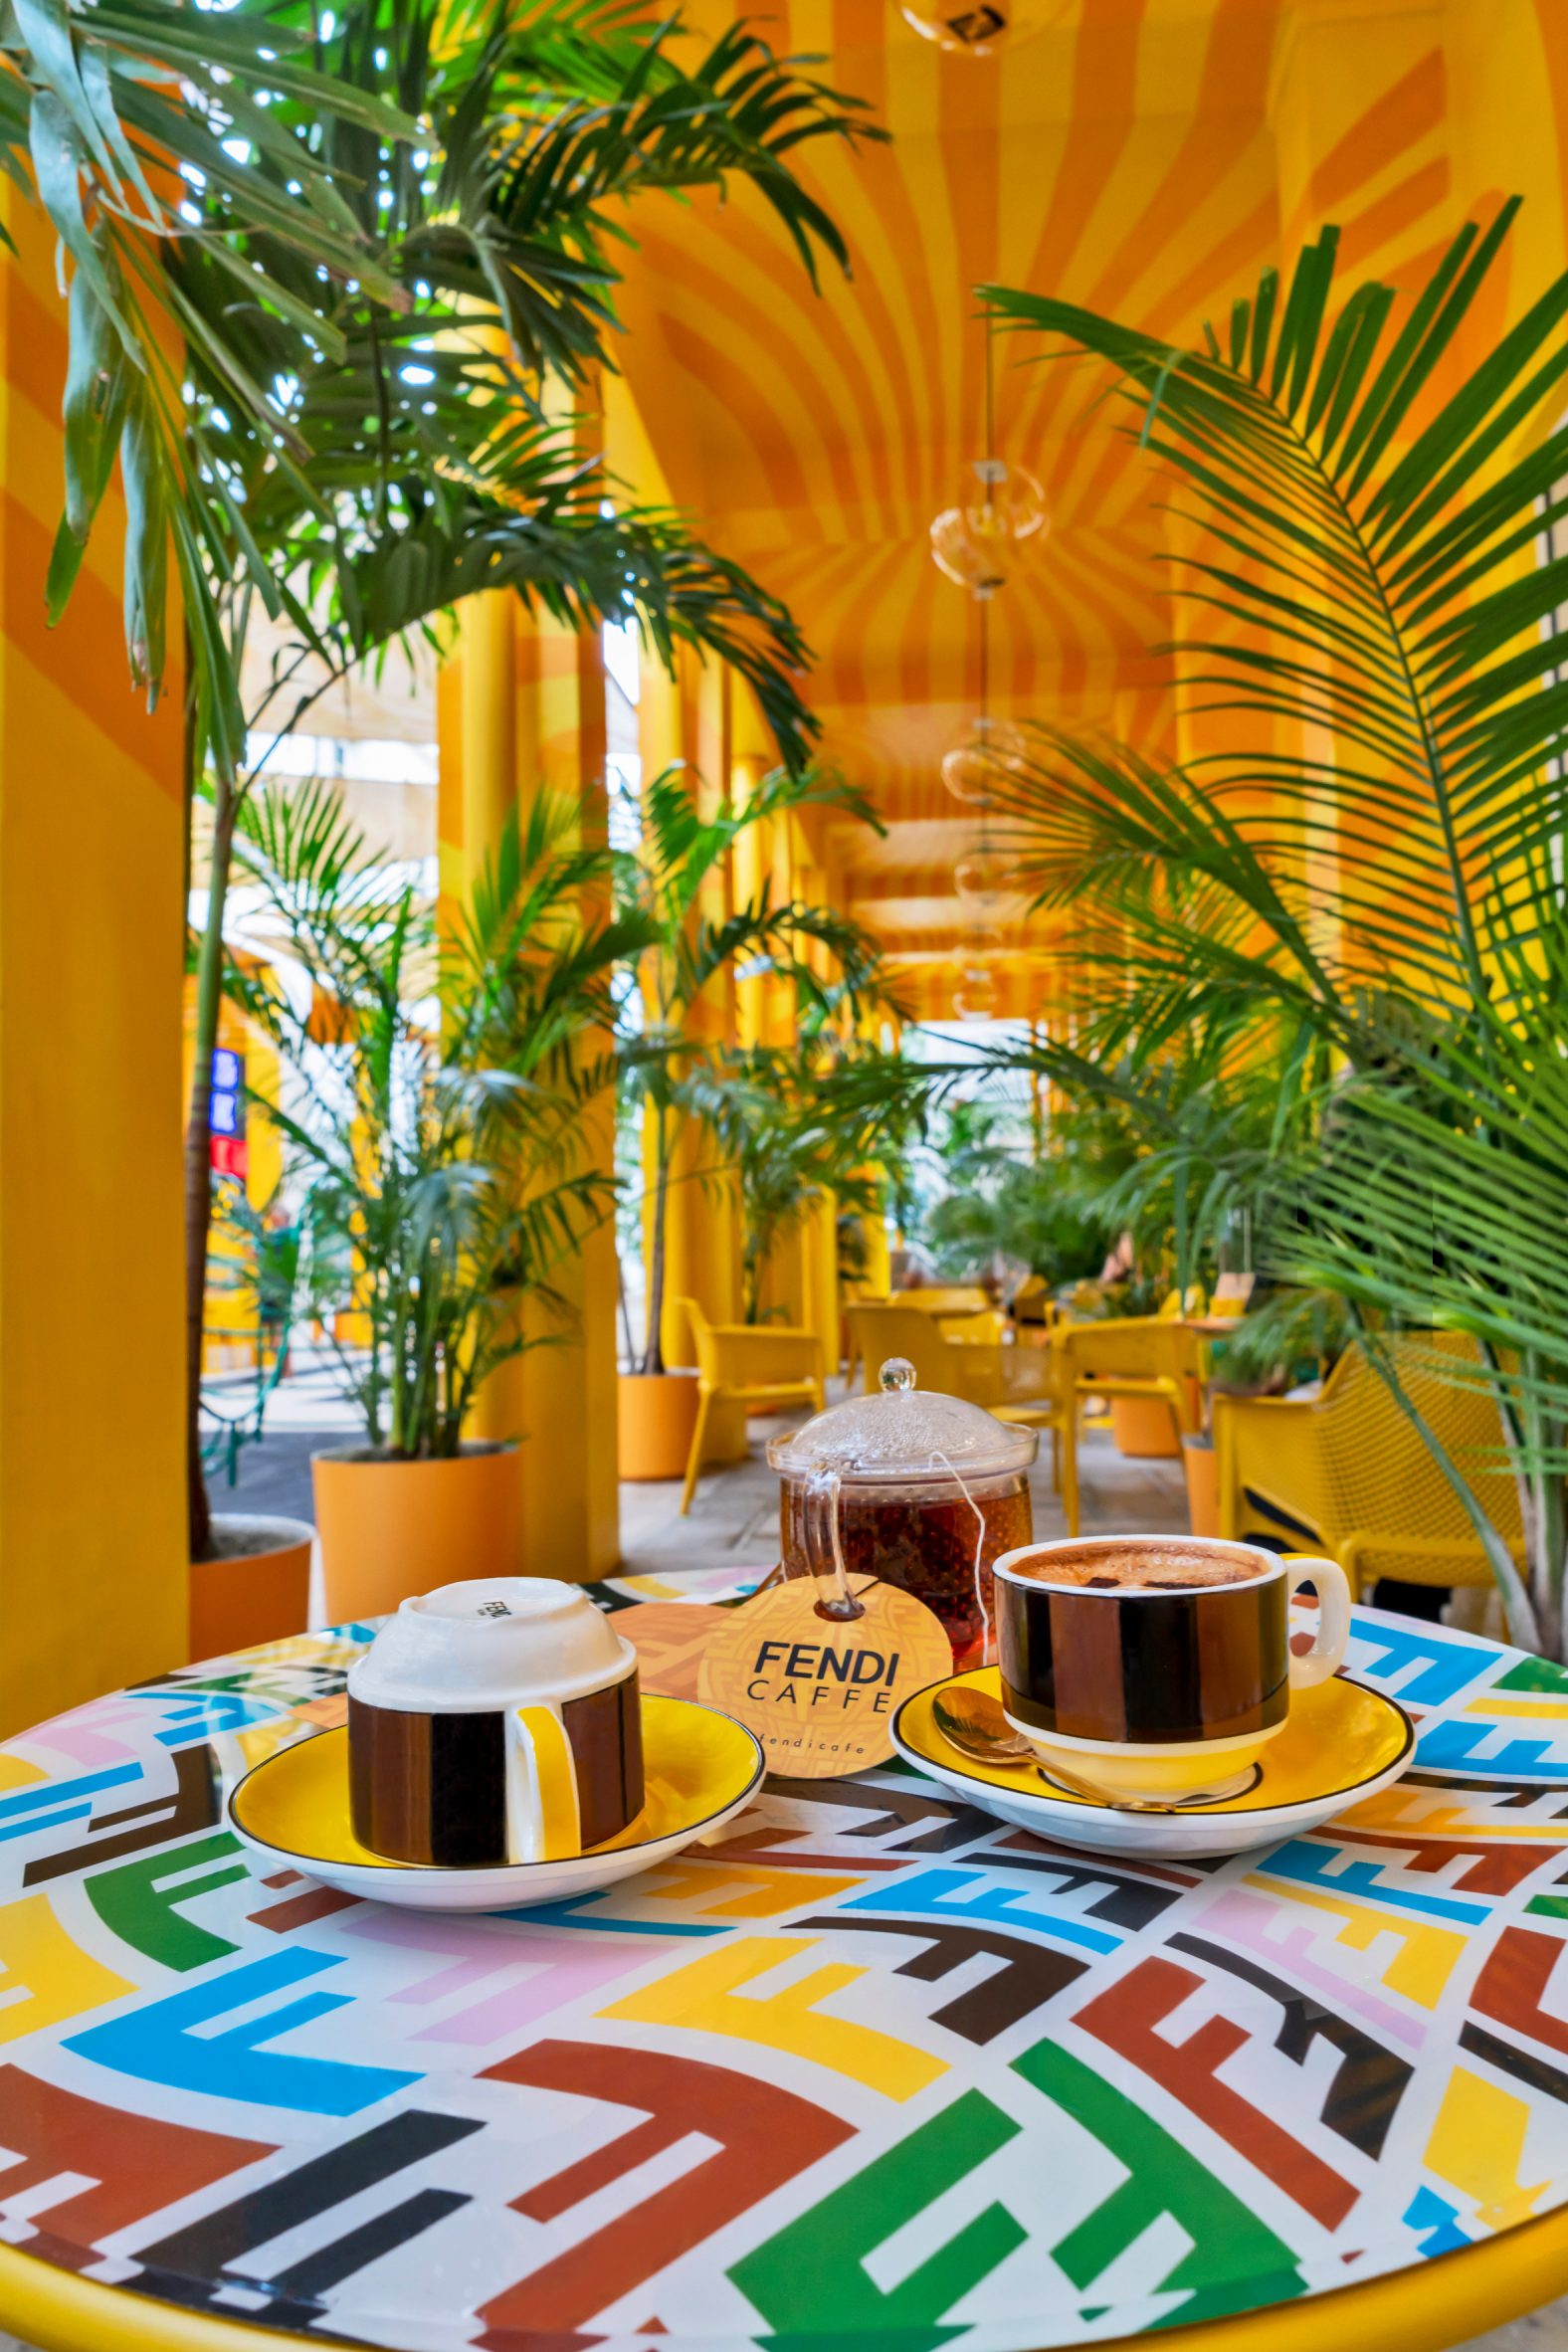 A FASHIONABLE BRUNCH AT THE FENDI CAFFE IN THE MIAMI DESIGN